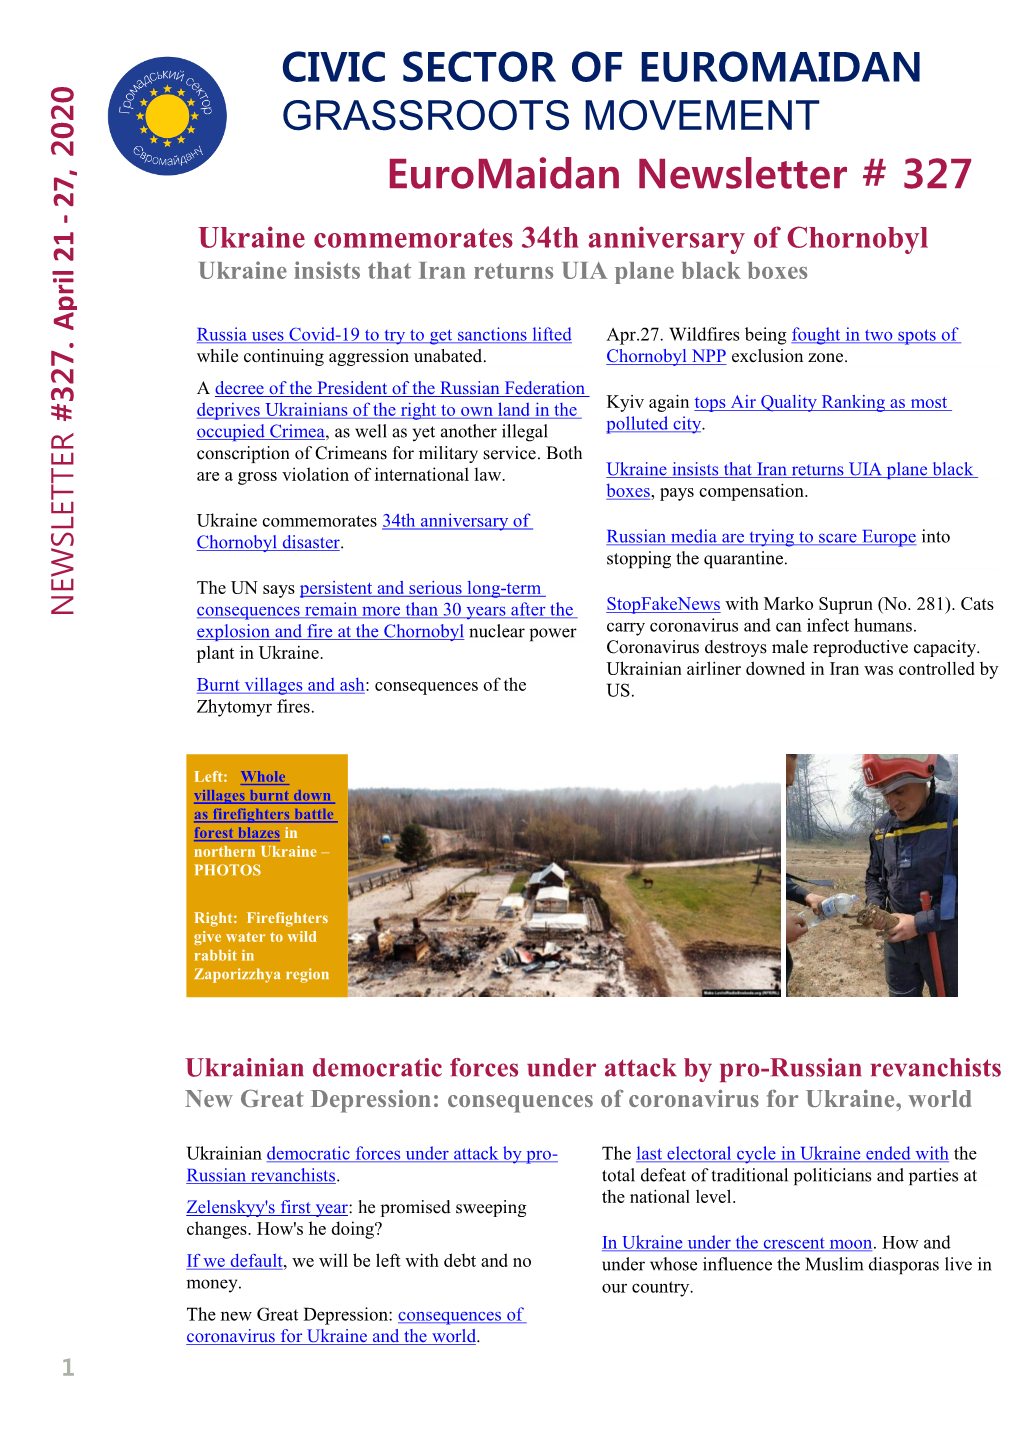 Euromaidan Newsletter # 327 CIVIC SECTOR of EUROMAIDAN